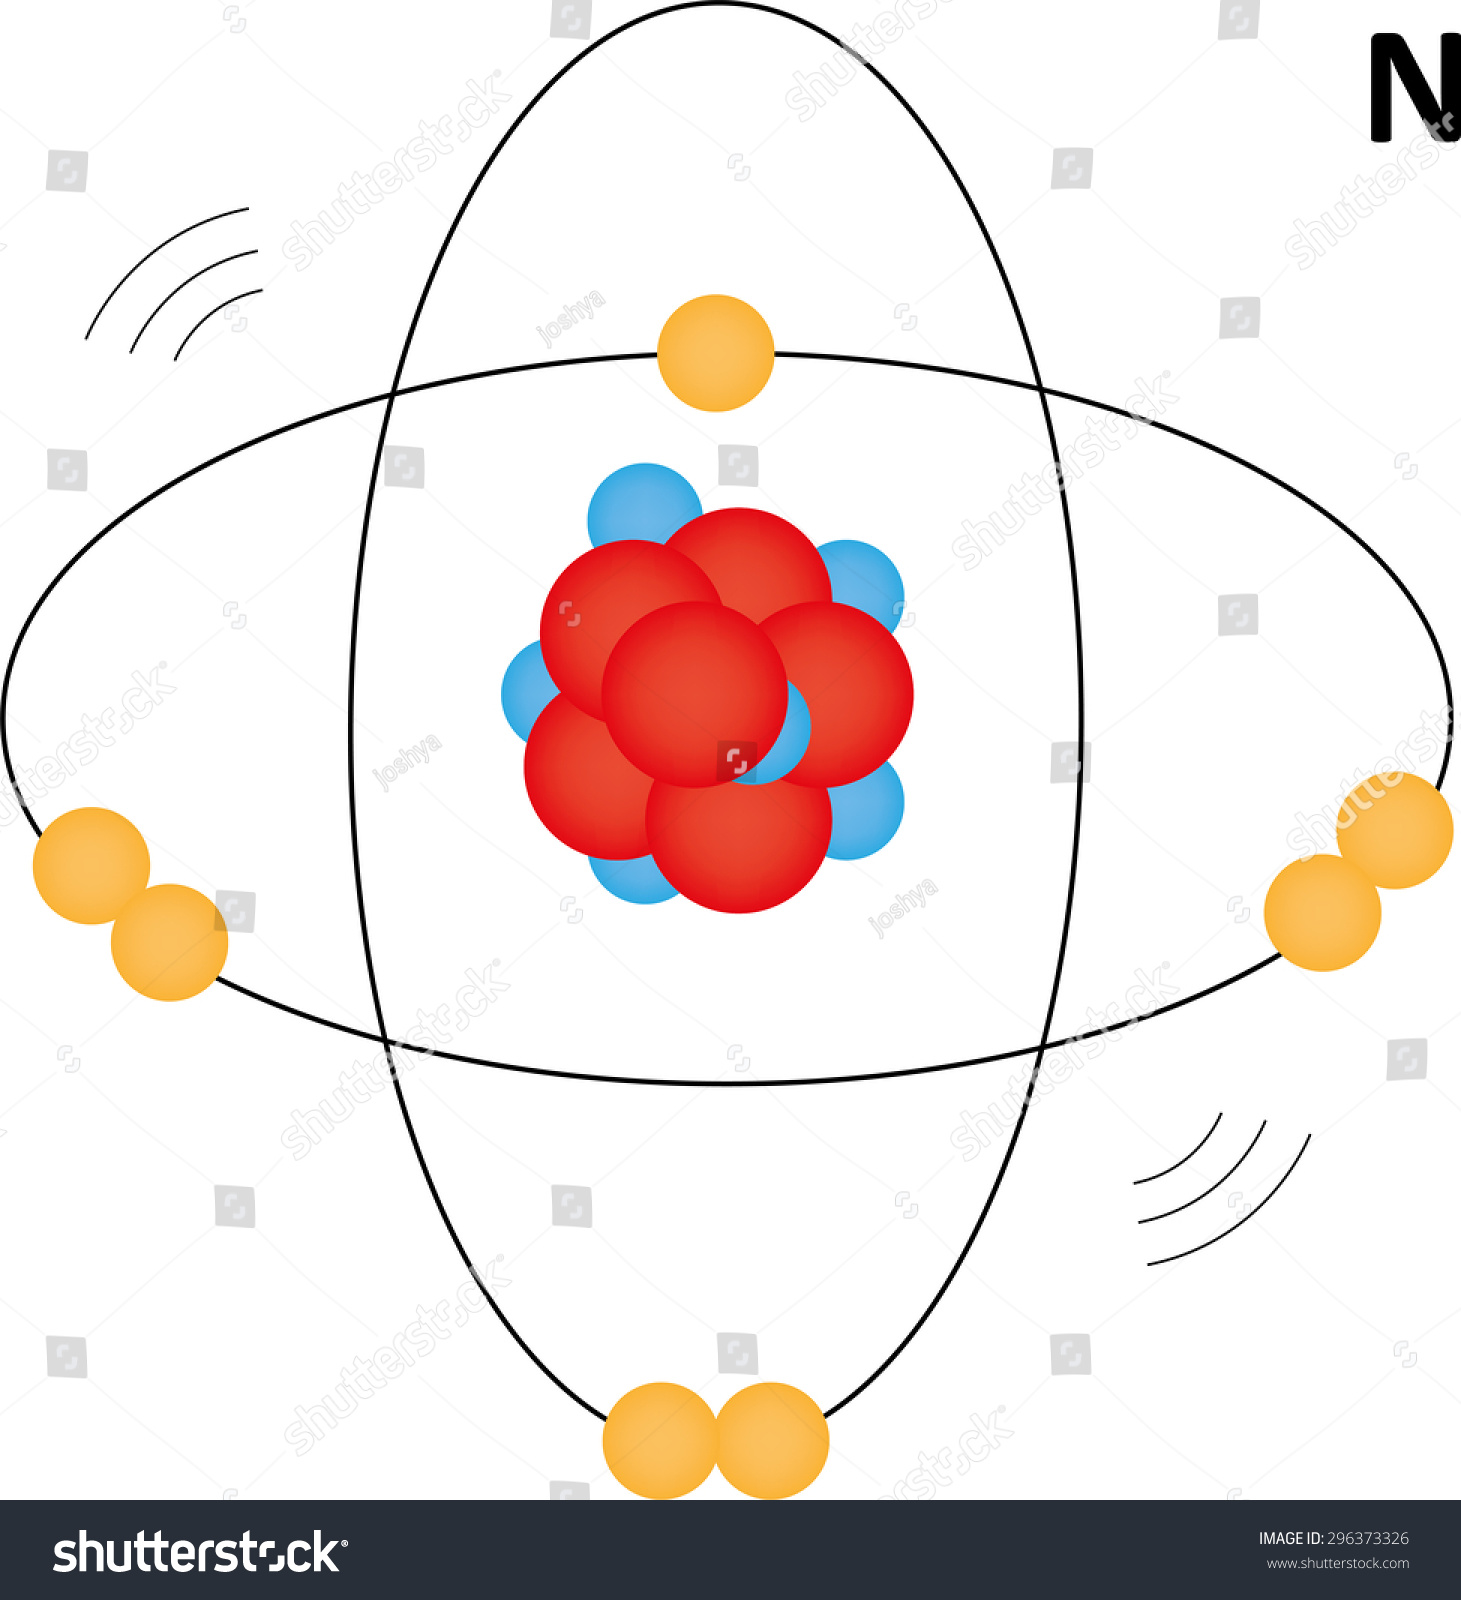 Изобразите модель атома азота. Модель атома азота. Атомная модель азота. Модель атома азота рисунок. Атом азота рисунок.